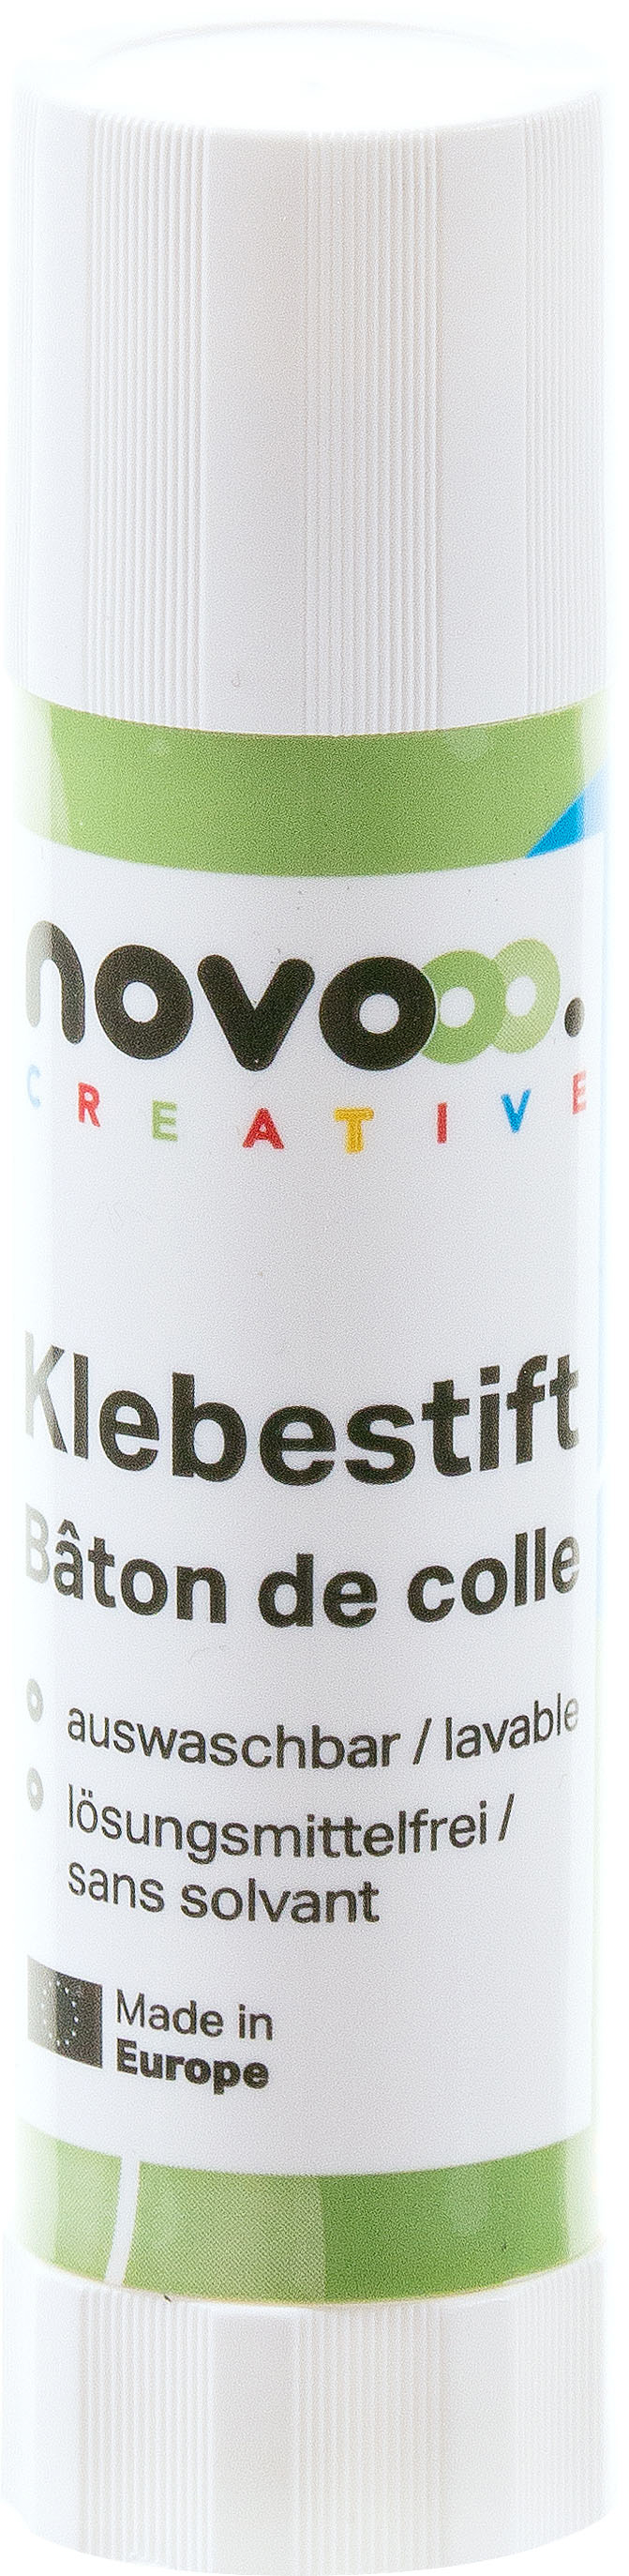 NOVOOO Creative Klebestift 40 g